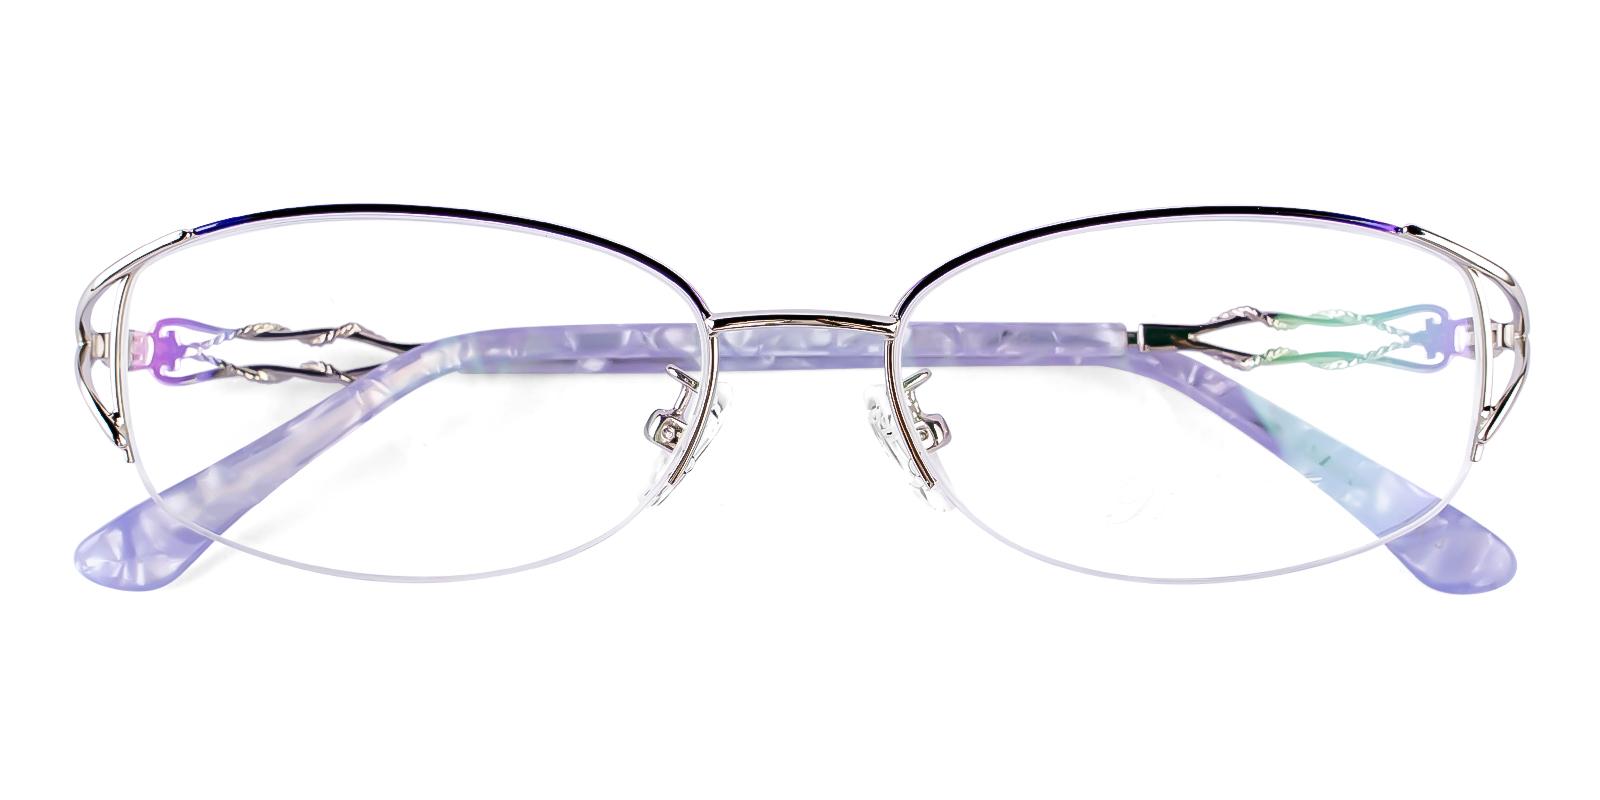 Catharics Purple Metal Eyeglasses , NosePads Frames from ABBE Glasses